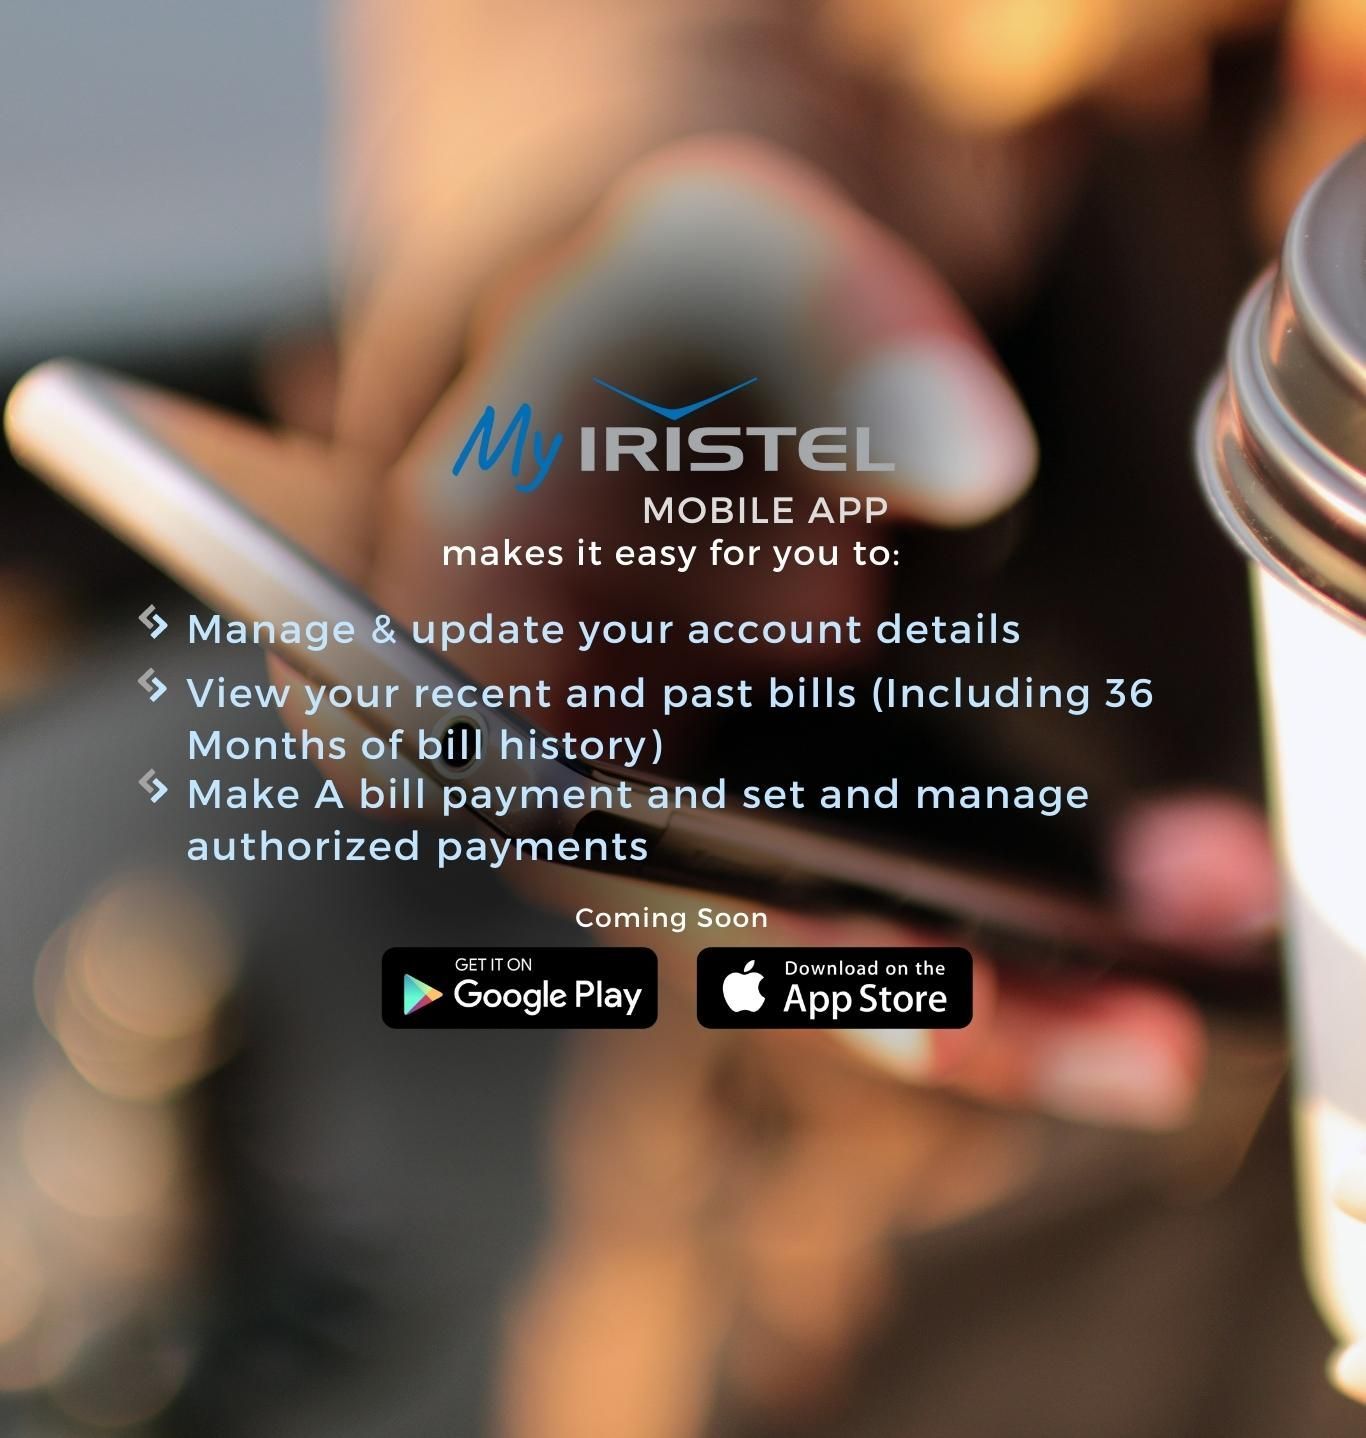 My Iristel Mobile App